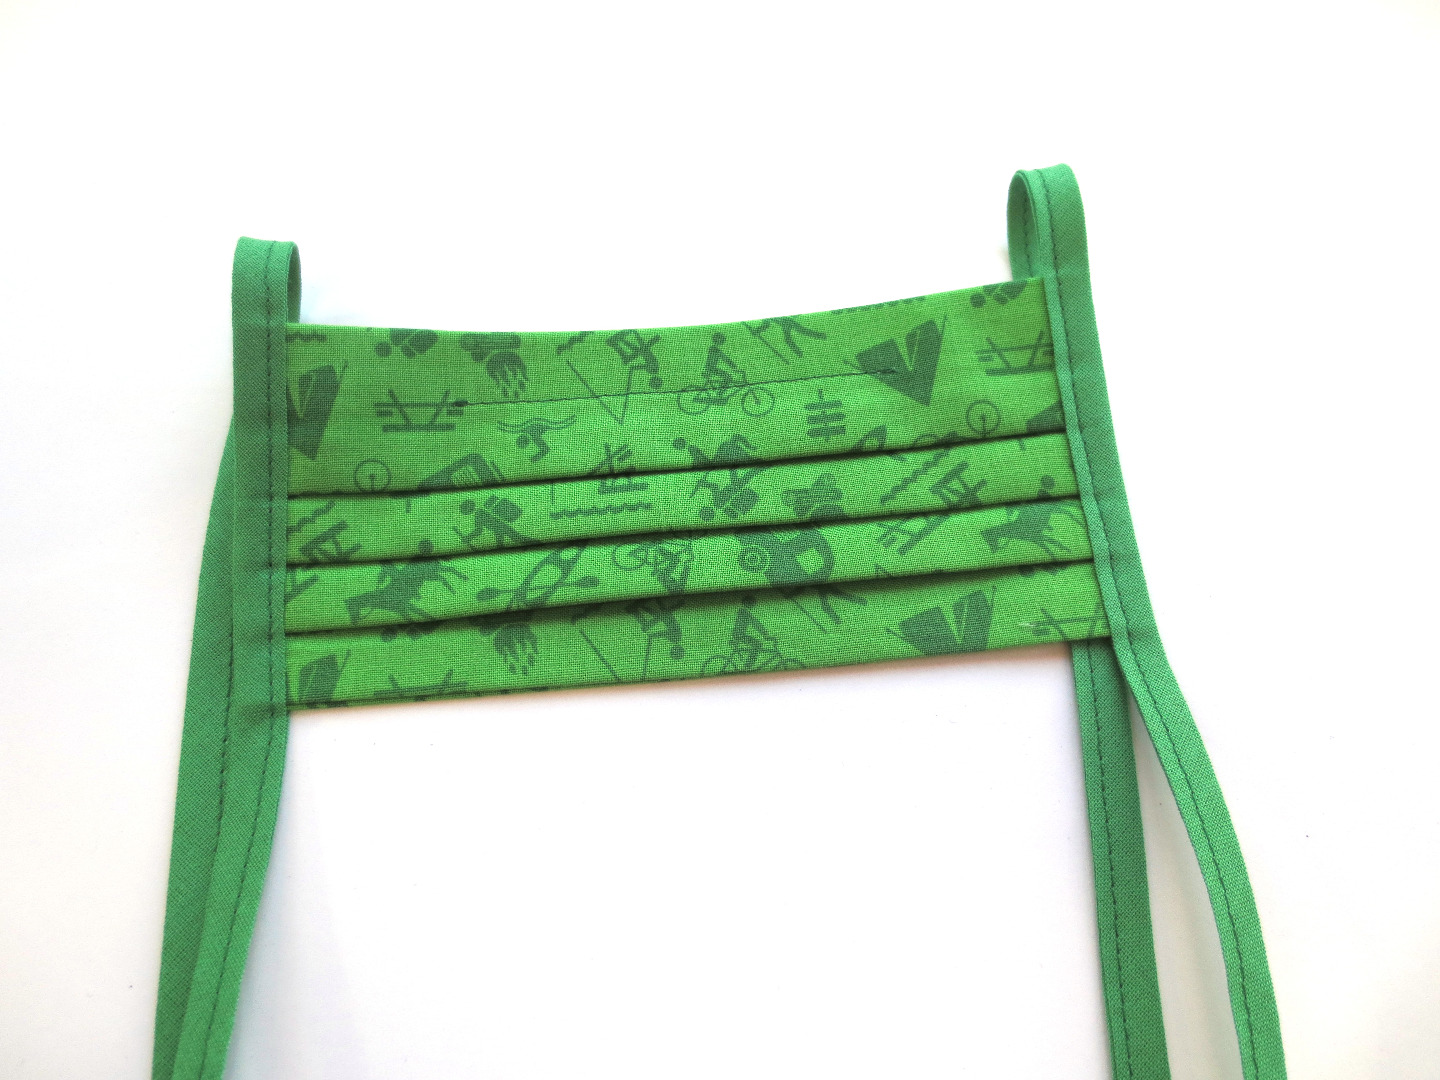 Behelfs-Maske - Camping grün -100 Baumwolle - mit Bändern - Biegedraht herausnehmbar 3